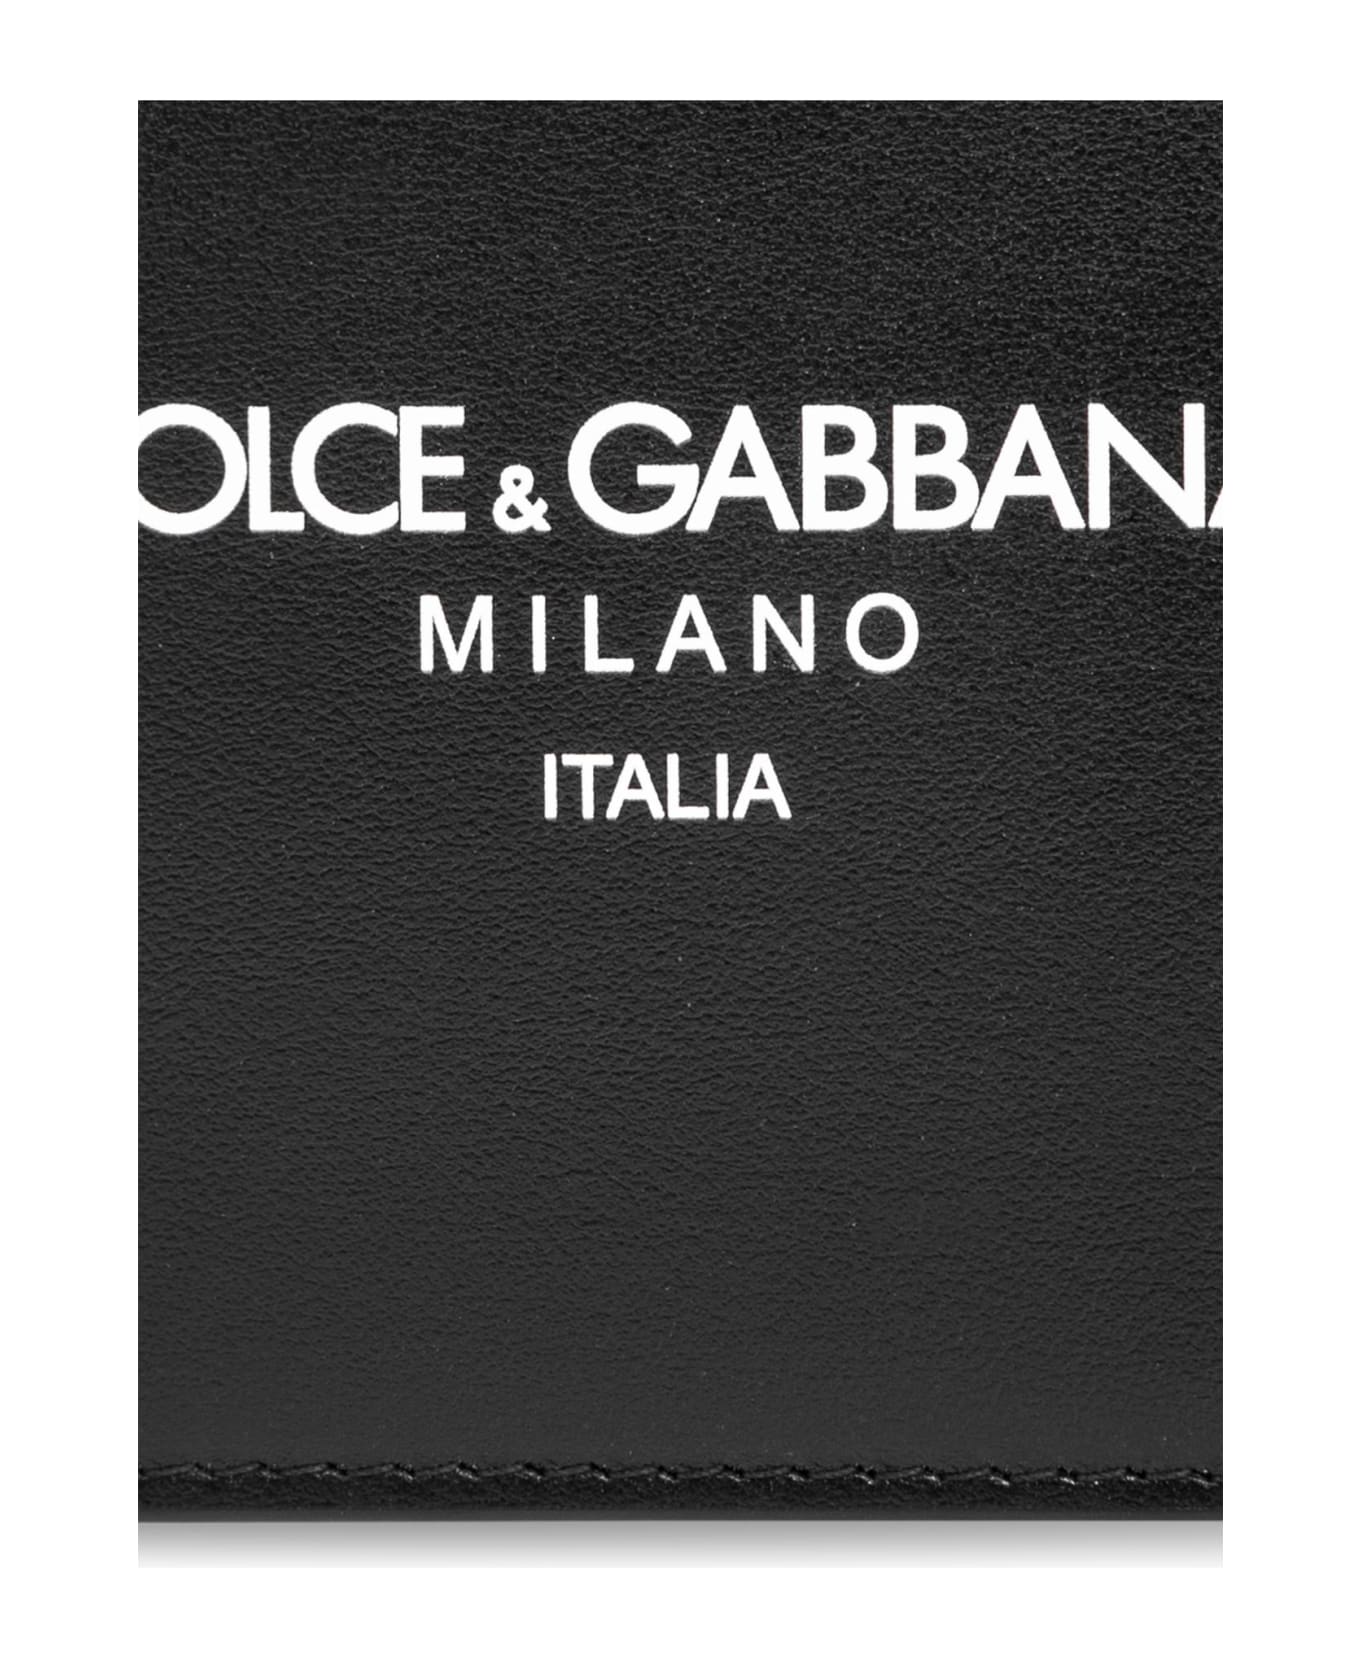 Dolce & Gabbana Leather Wallet - Black 財布